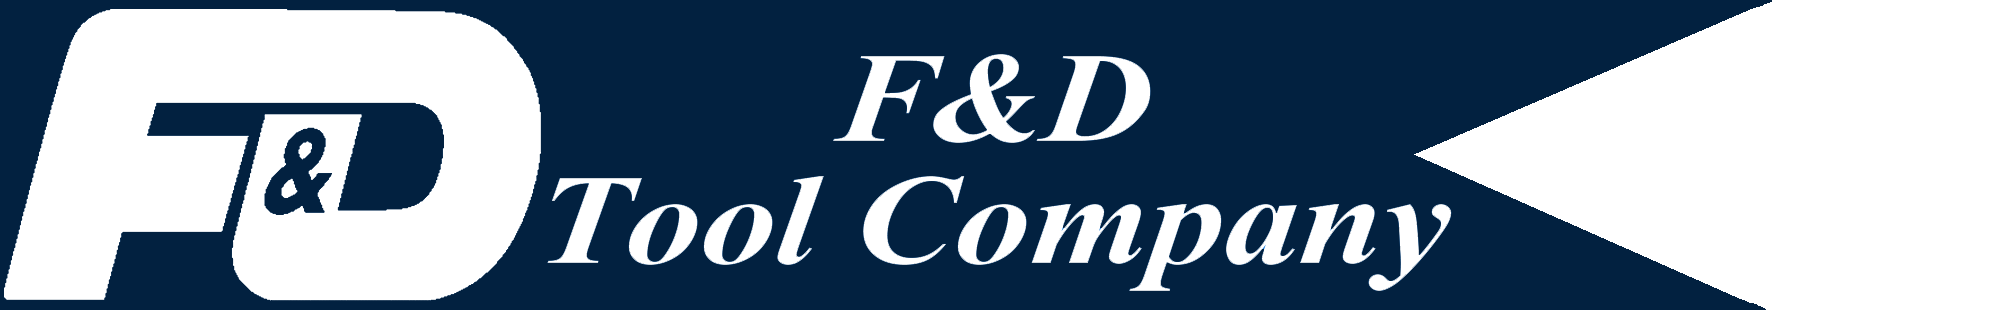 F&D Tool Company